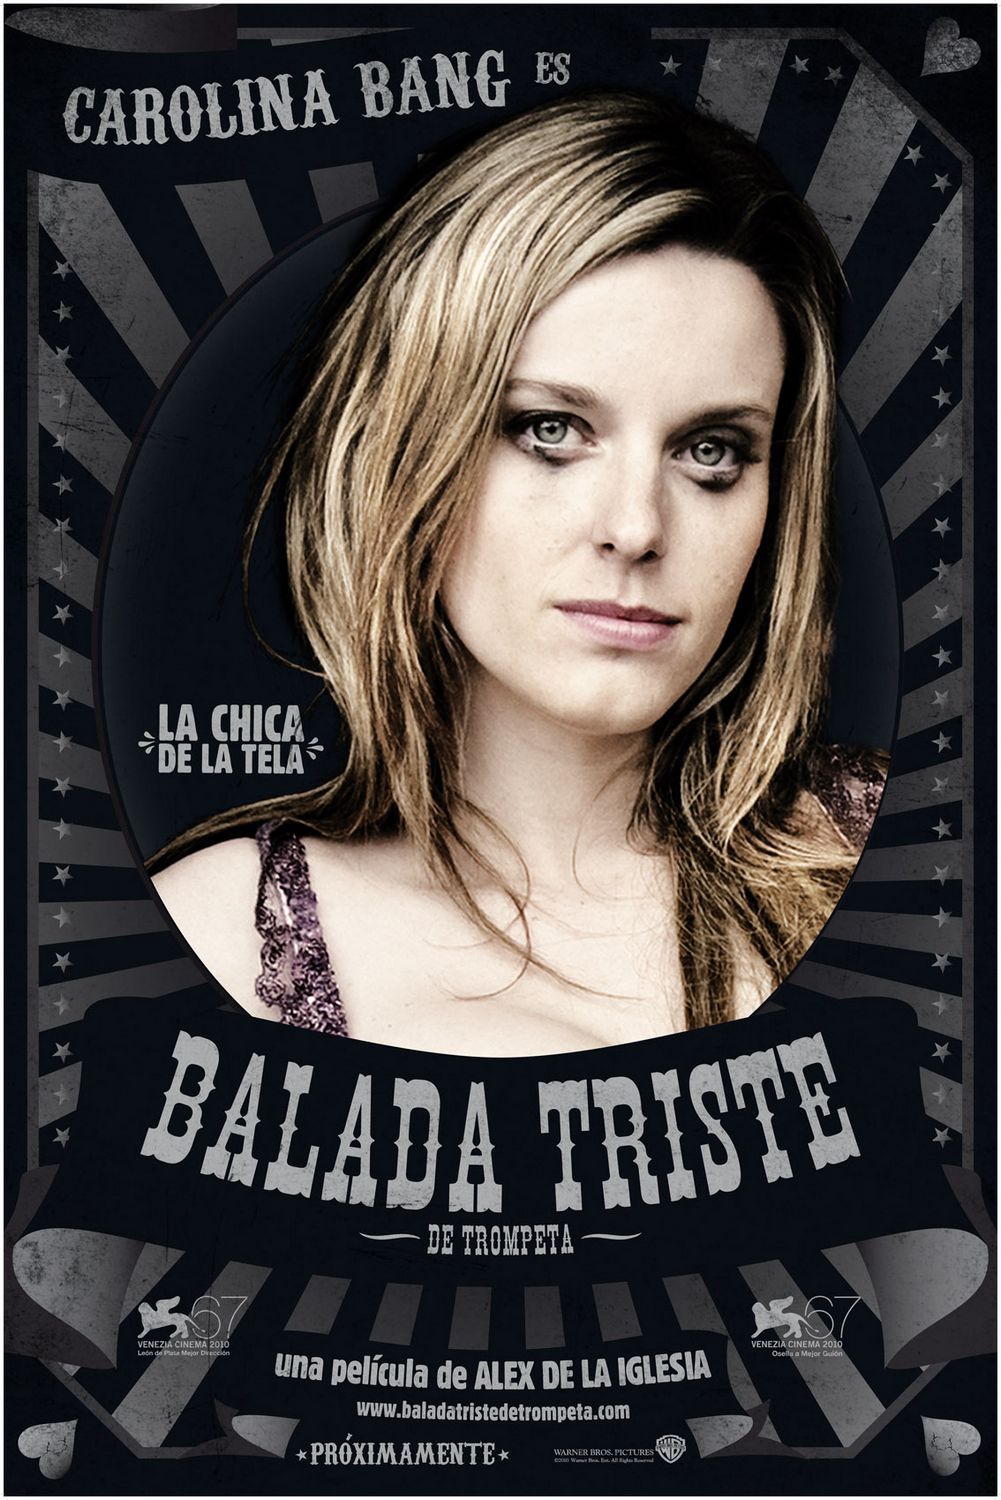 Extra Large Movie Poster Image for Balada triste de trompeta (#5 of 9)